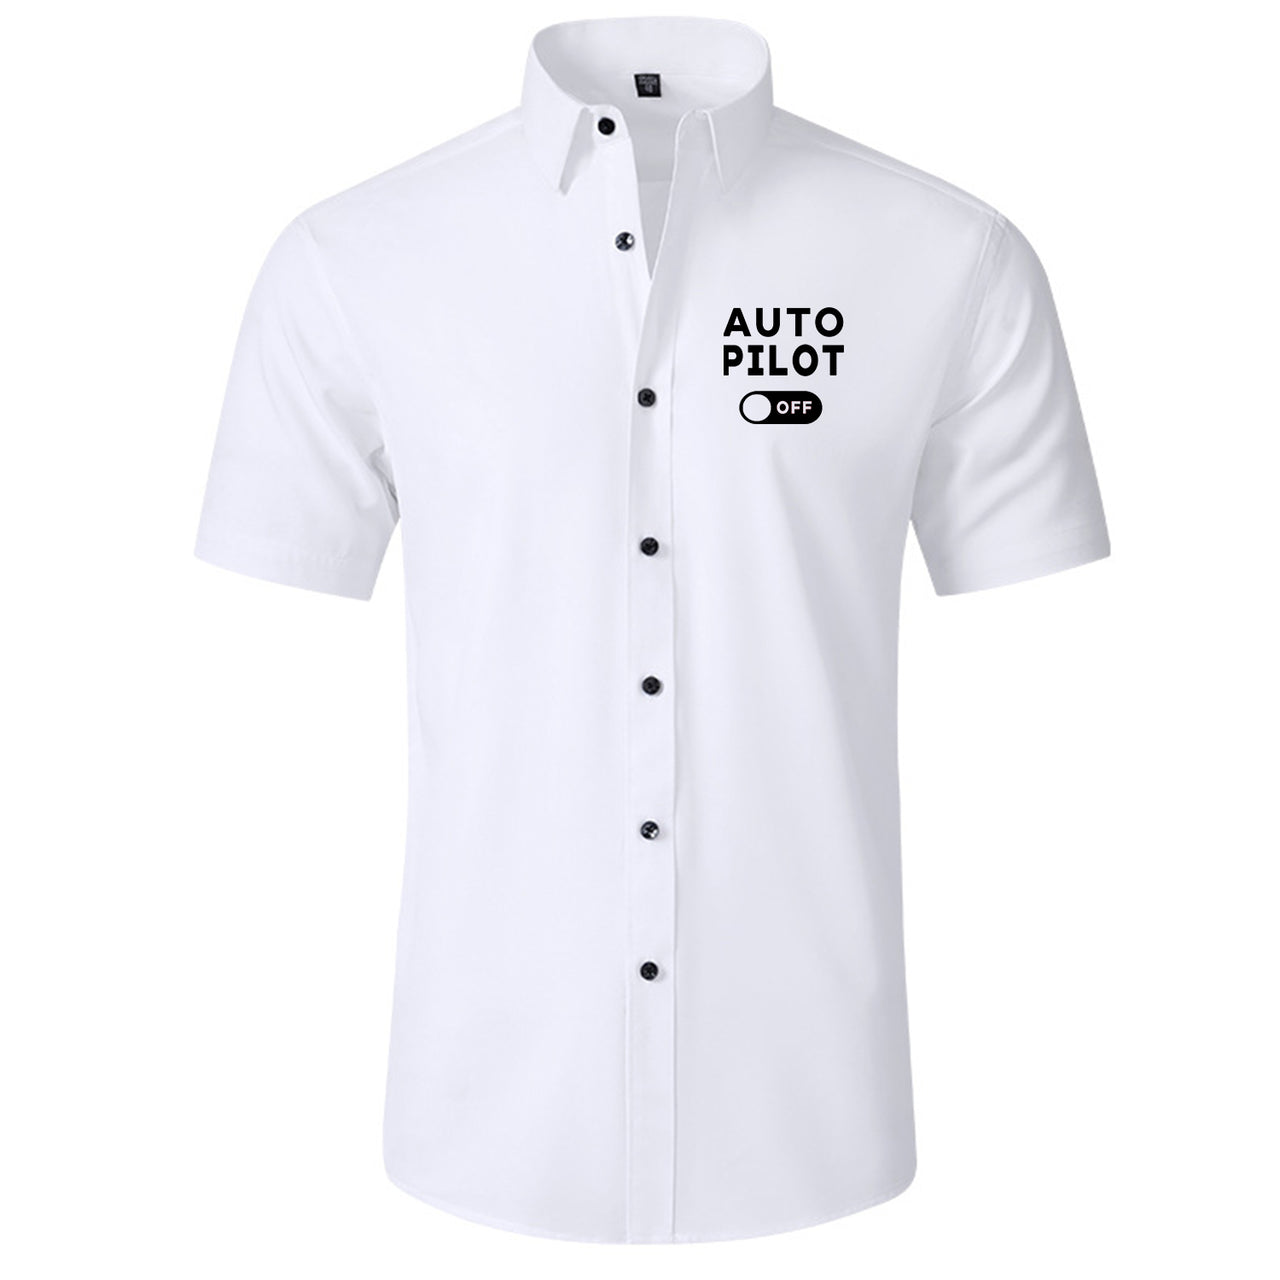 Auto Pilot Off Designed Short Sleeve Shirts